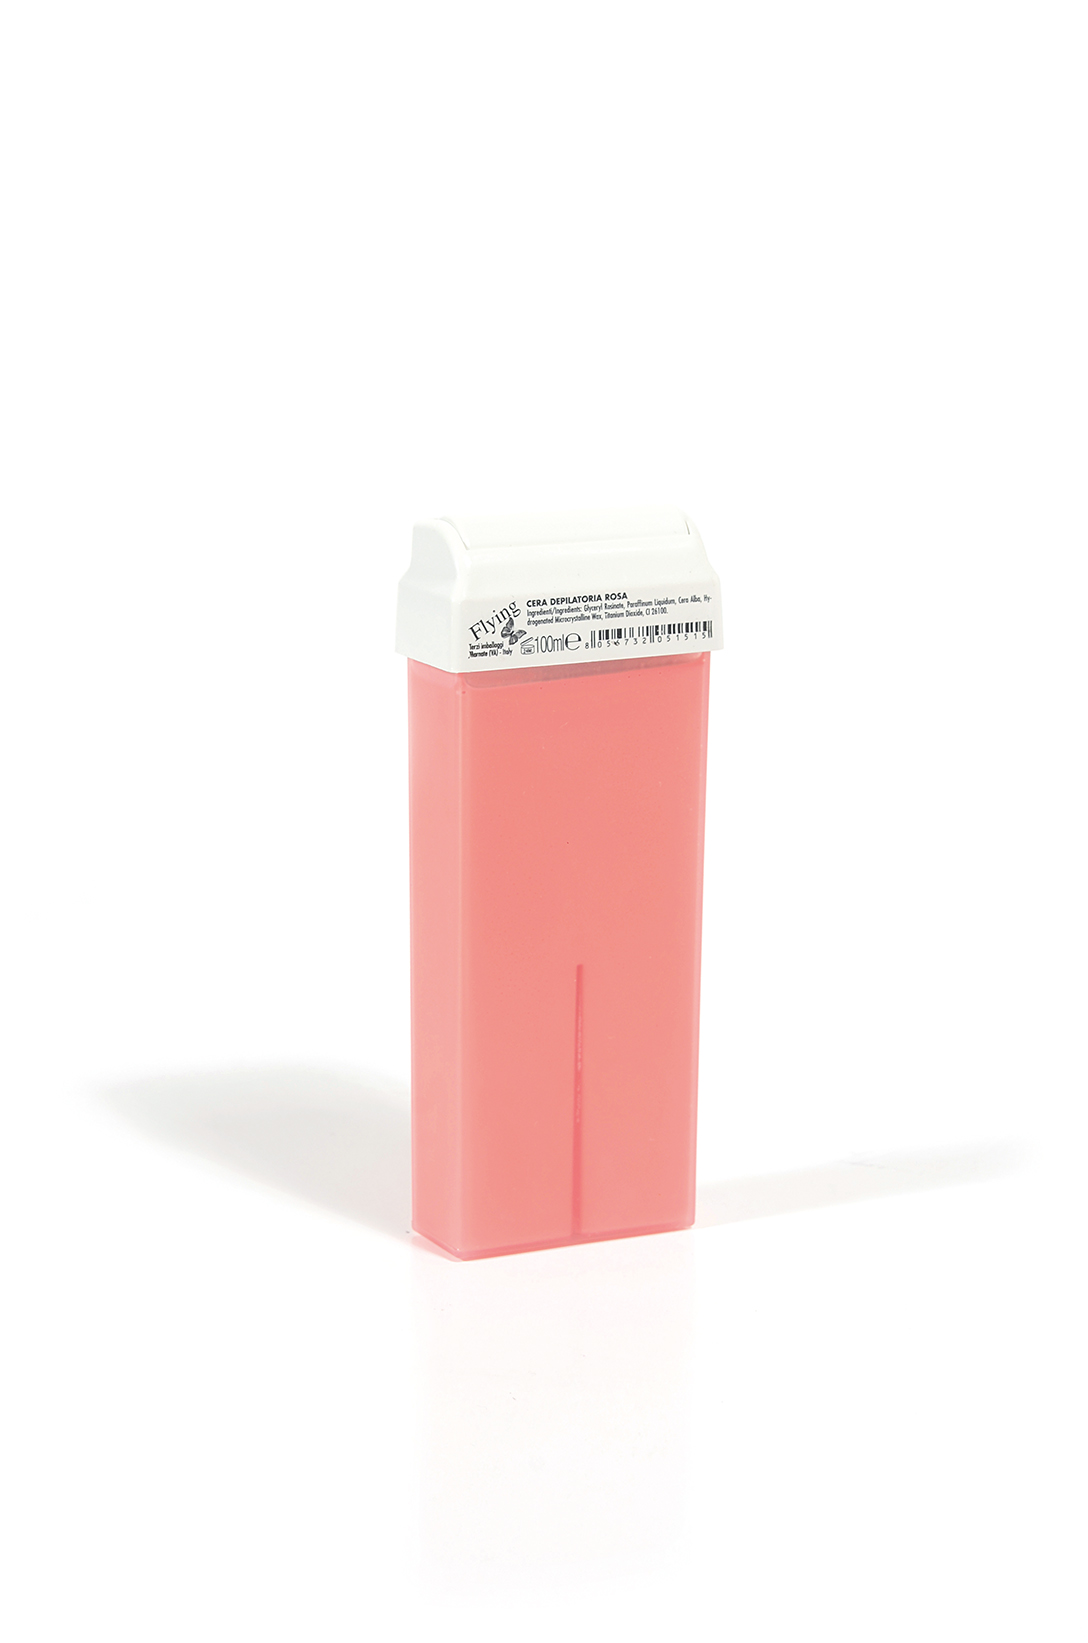 13373 - FLYING pink titanium dioxide wax roller refill, 100 ml